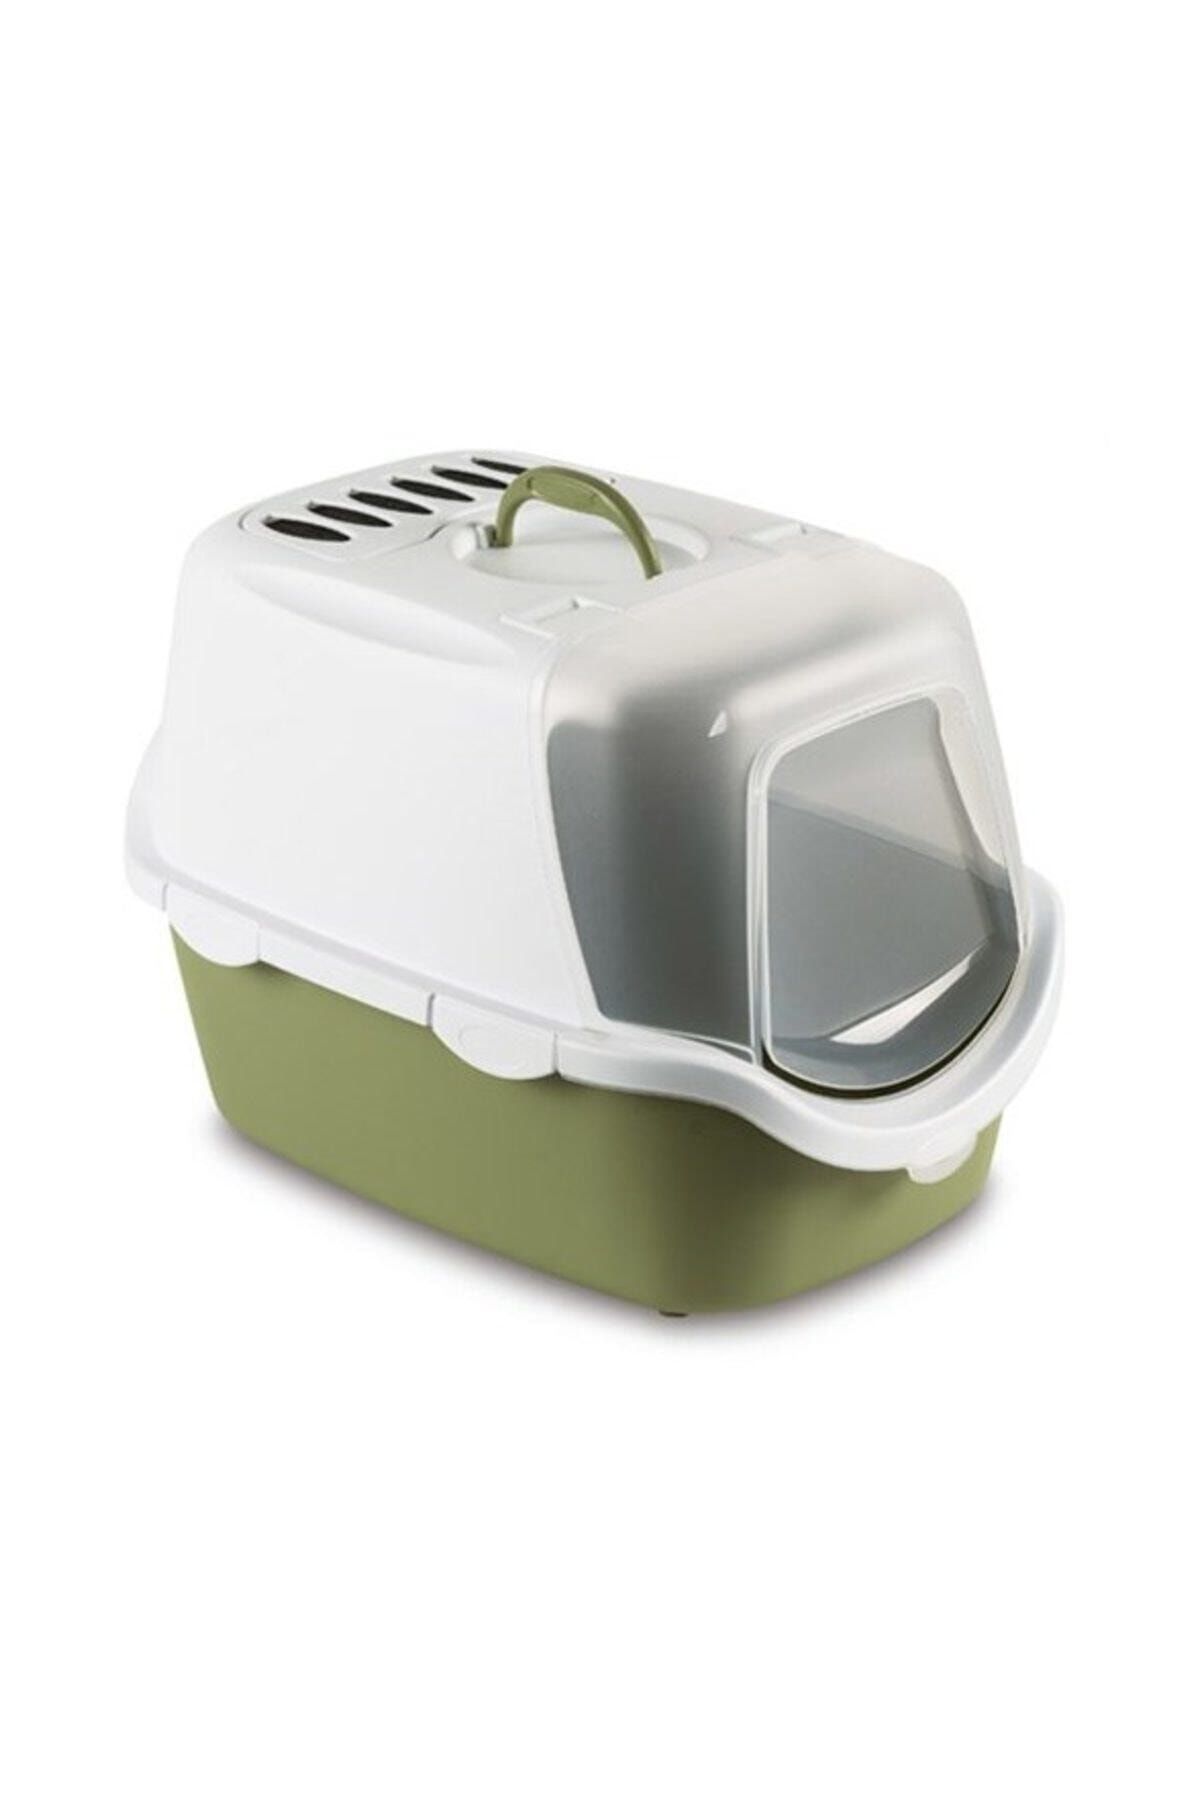 Petbox Stefanplast Filtreli Kapalı Kedi Tuvaleti - Yeşil